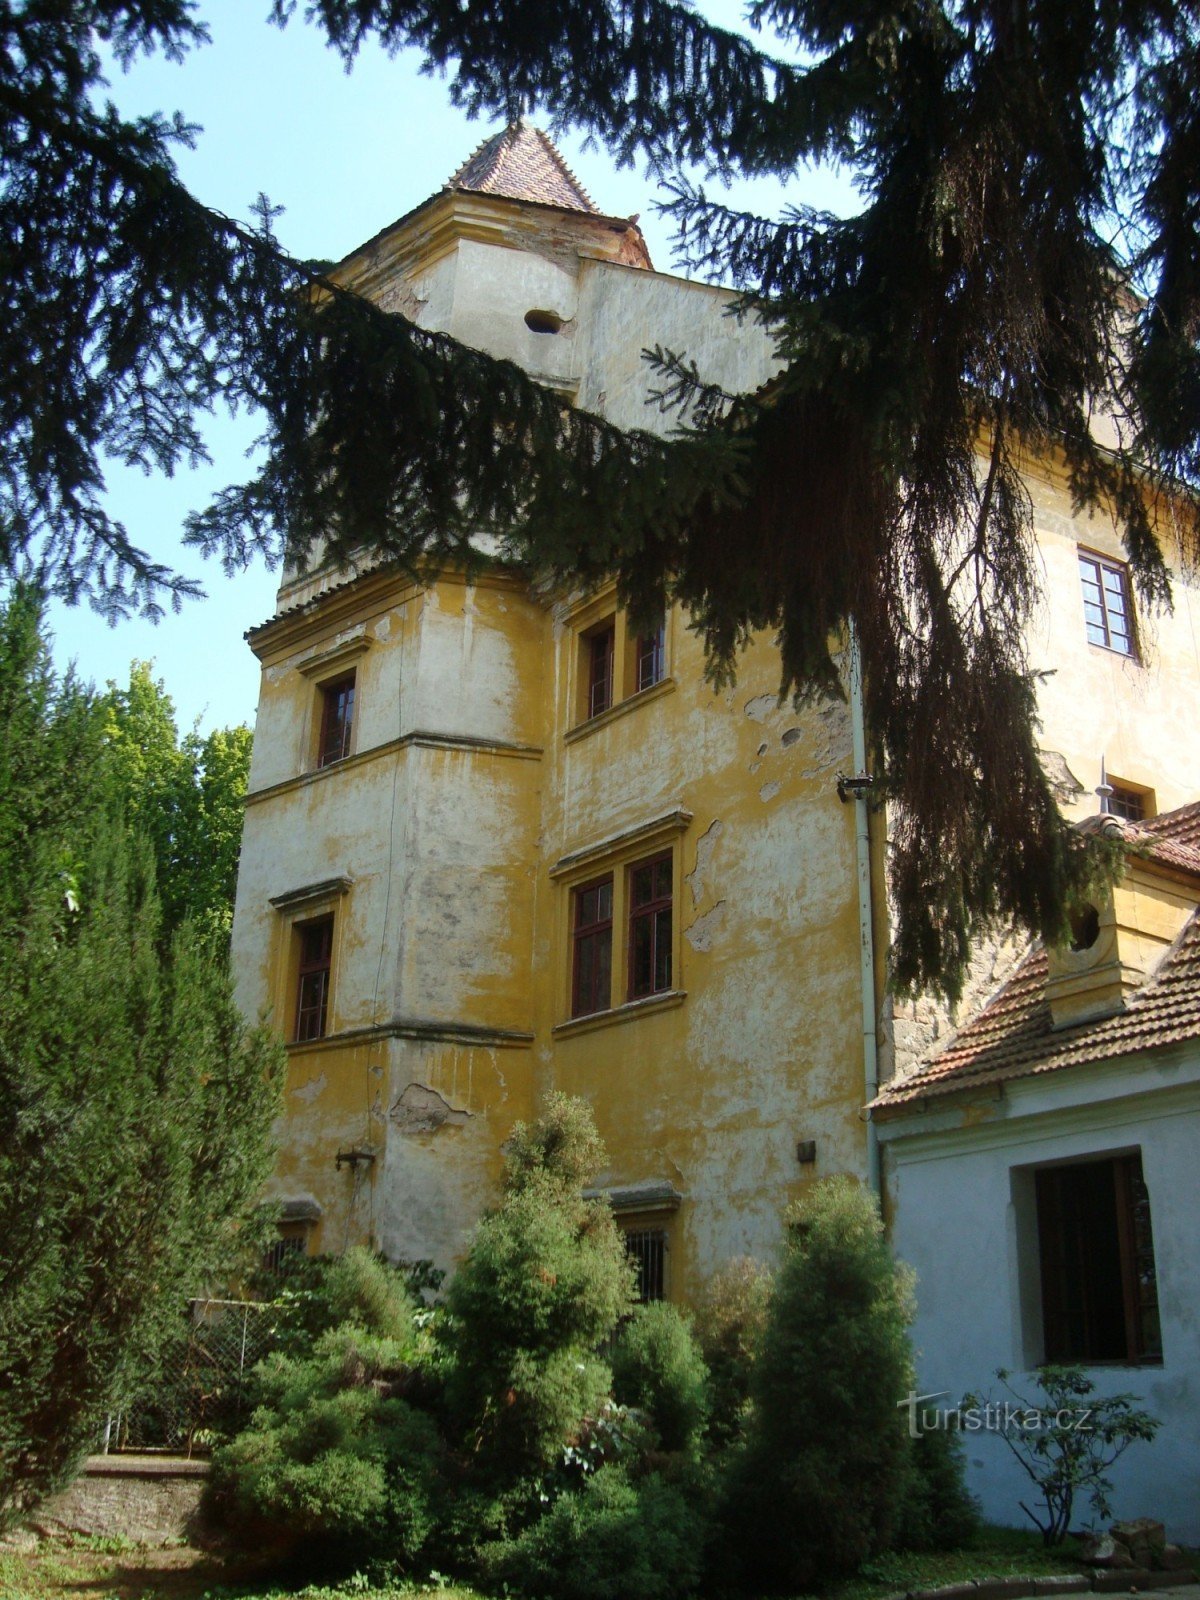 Tour du château de Radim-Photo : Ulrych Mir.